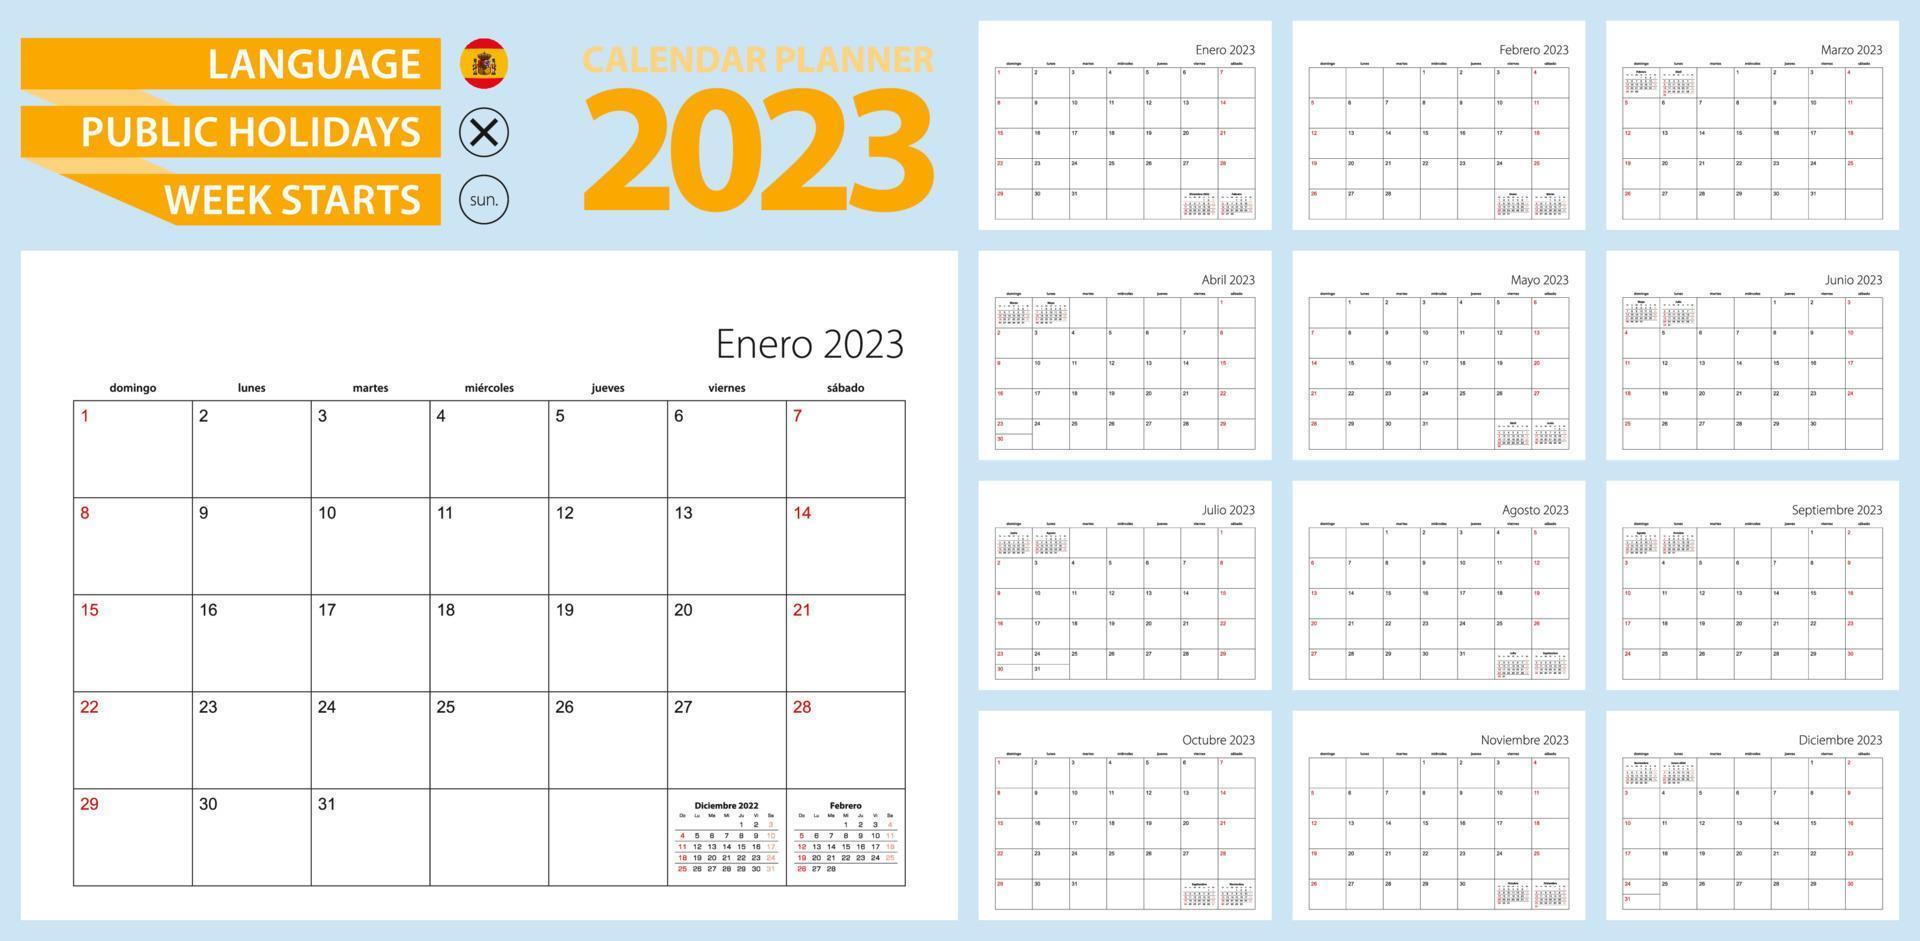 Spanish calendar planner for 2023. Spanish language, week starts from Sunday. vector